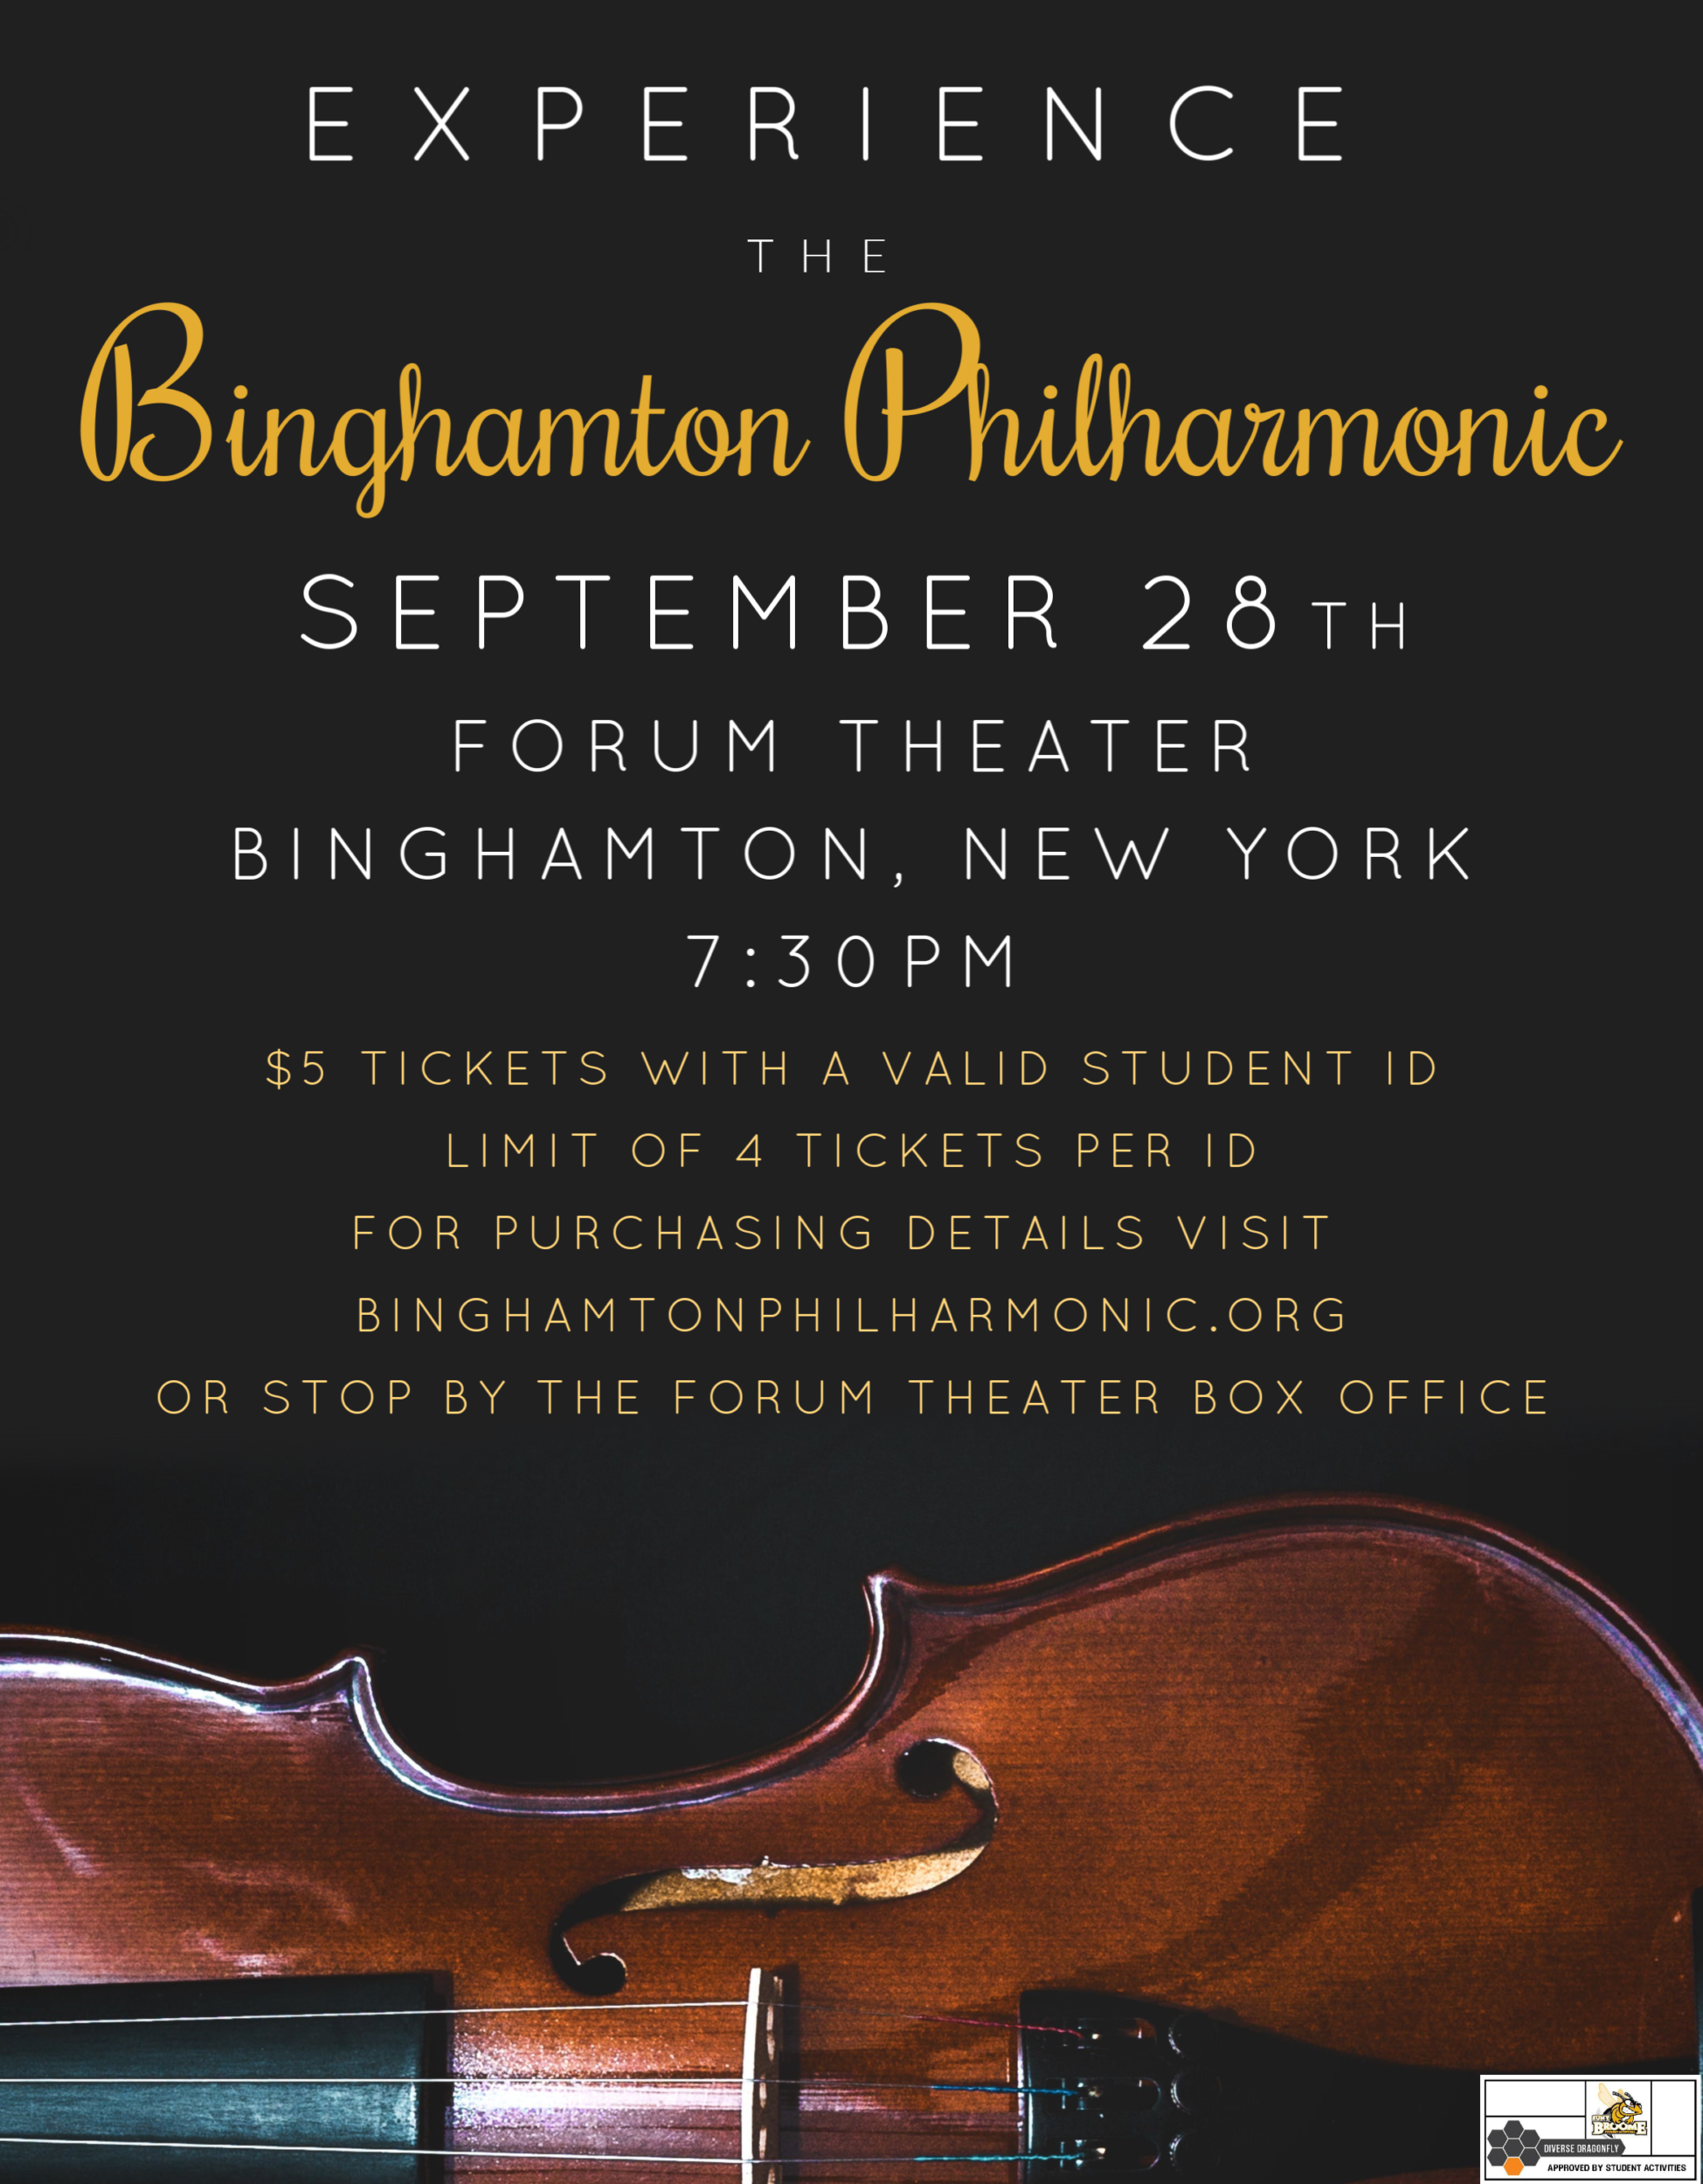 Experience the Binghamton Philharmonic at 7:30 p.m. Sept. 28, 2019, in Binghamton's Forum Theater!